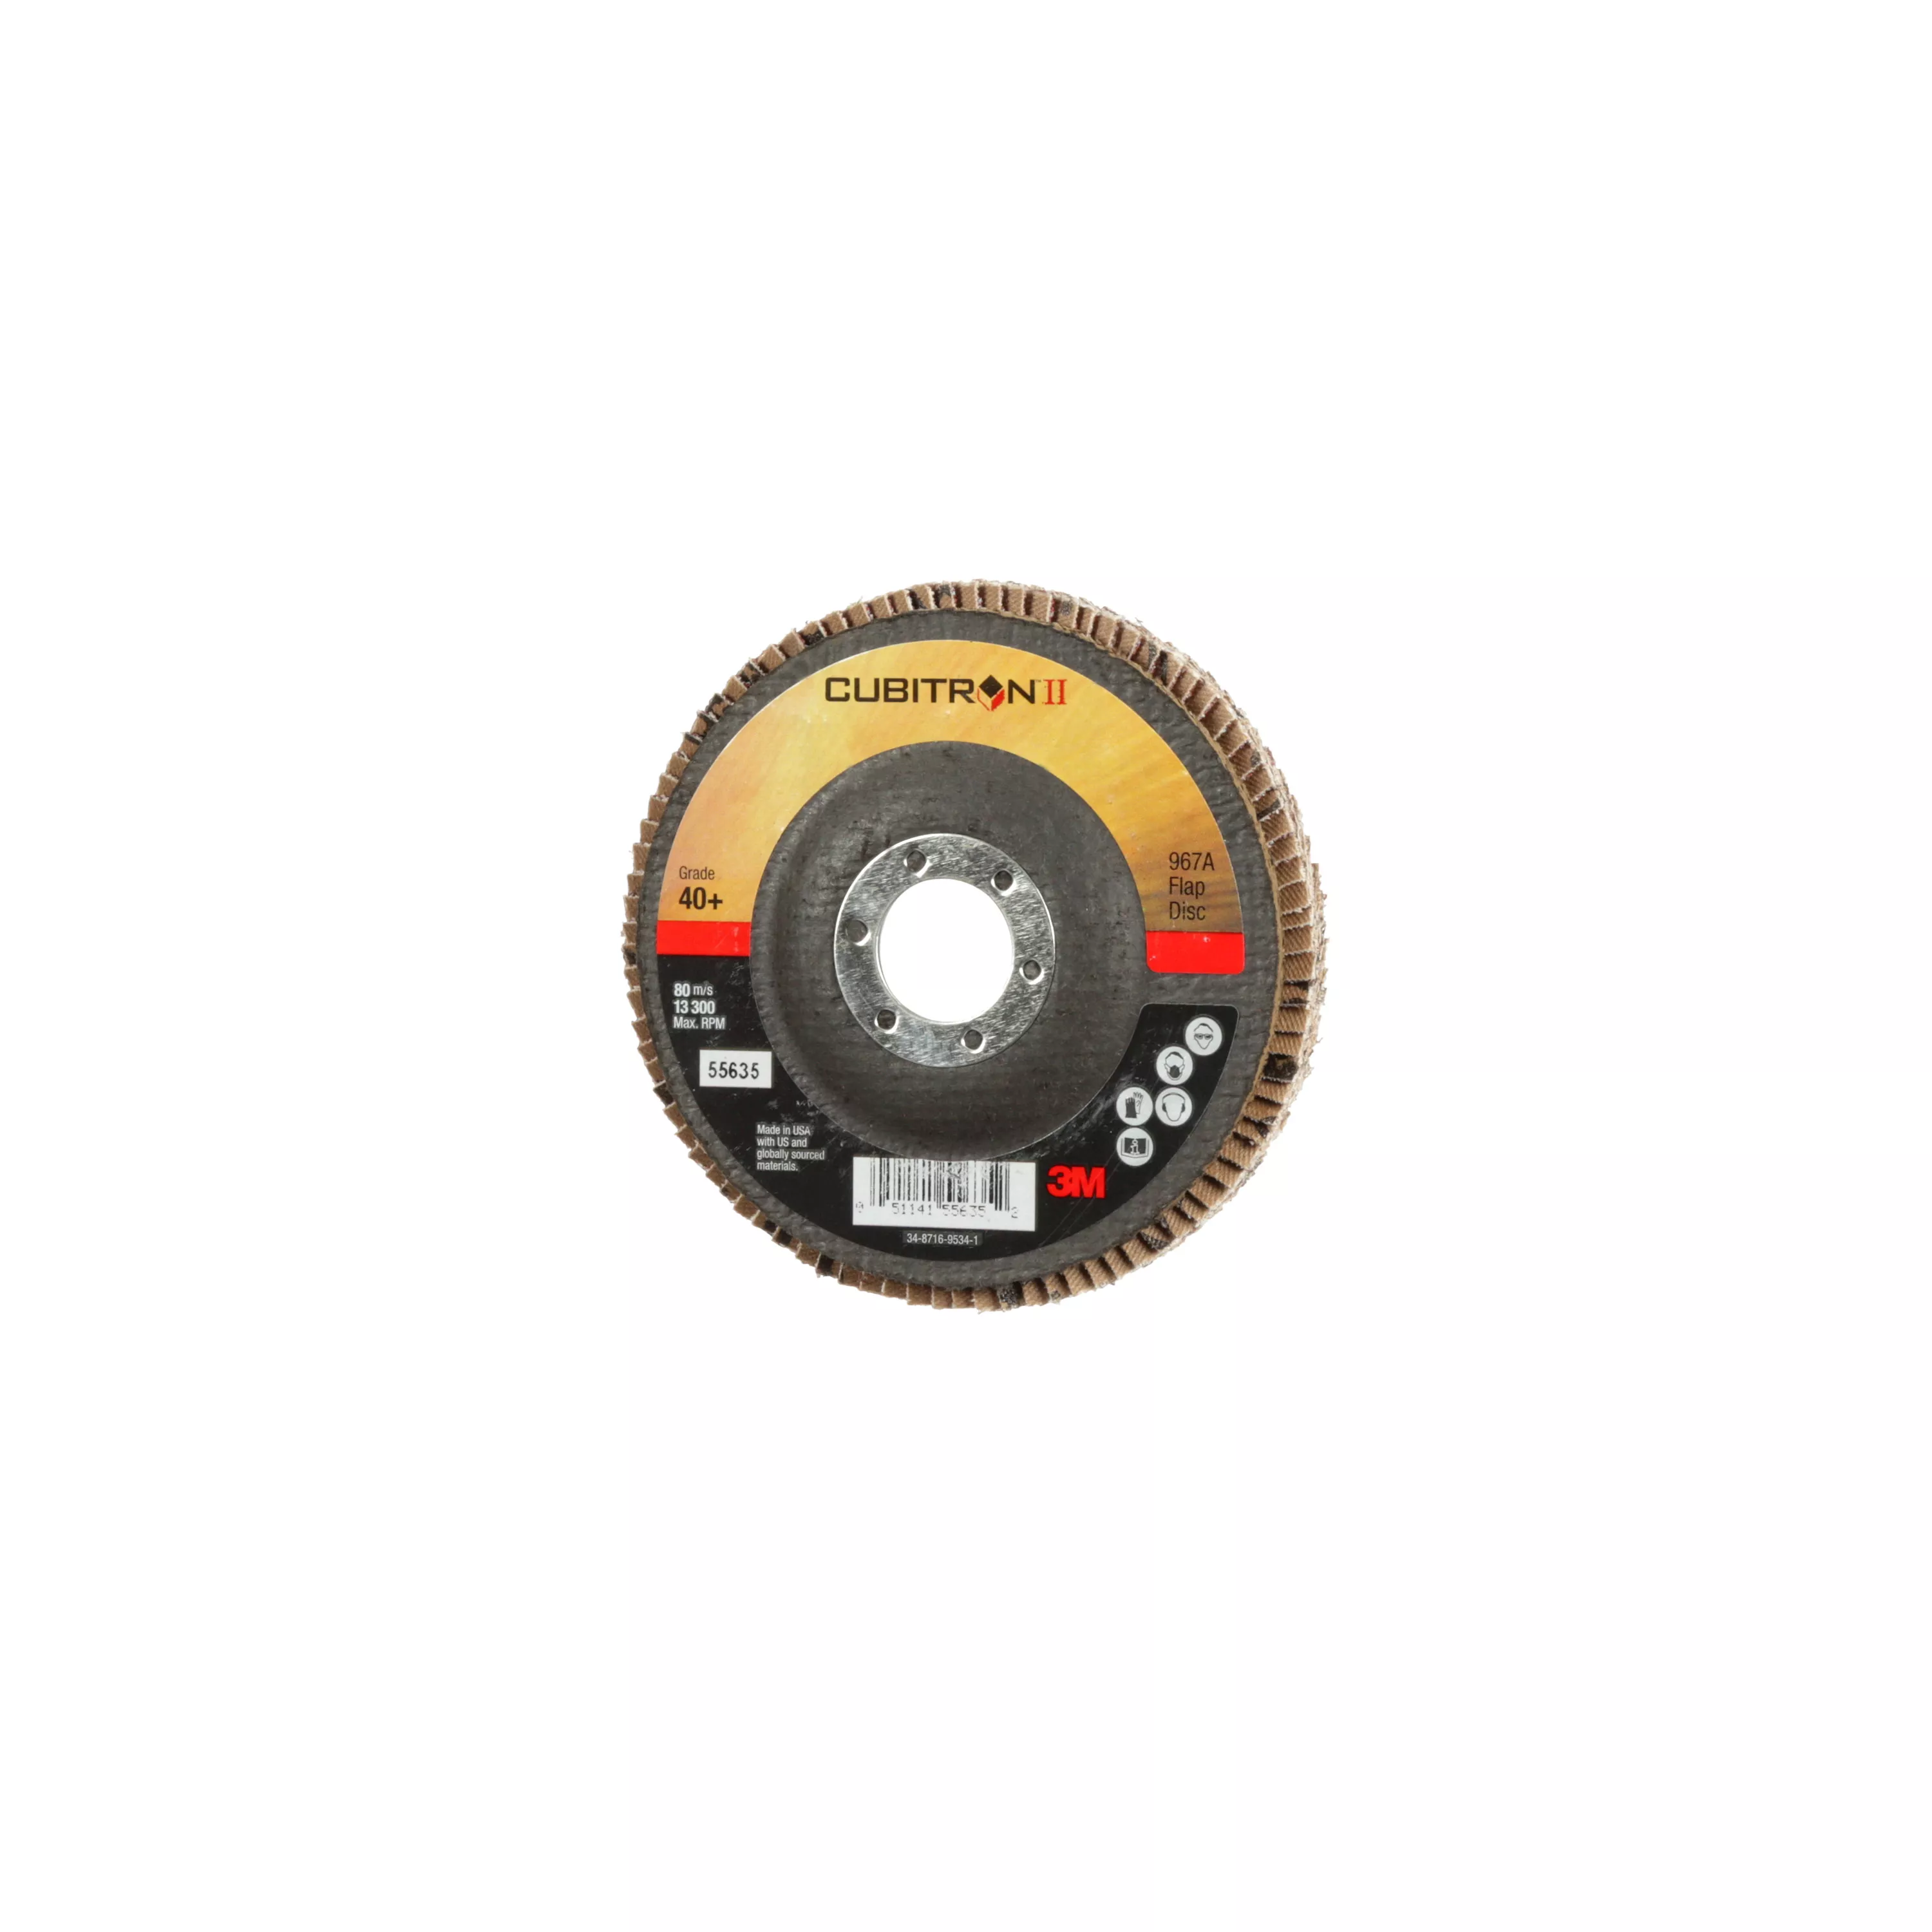 SKU 7100085781 | 3M™ Cubitron™ II Flap Disc 967A